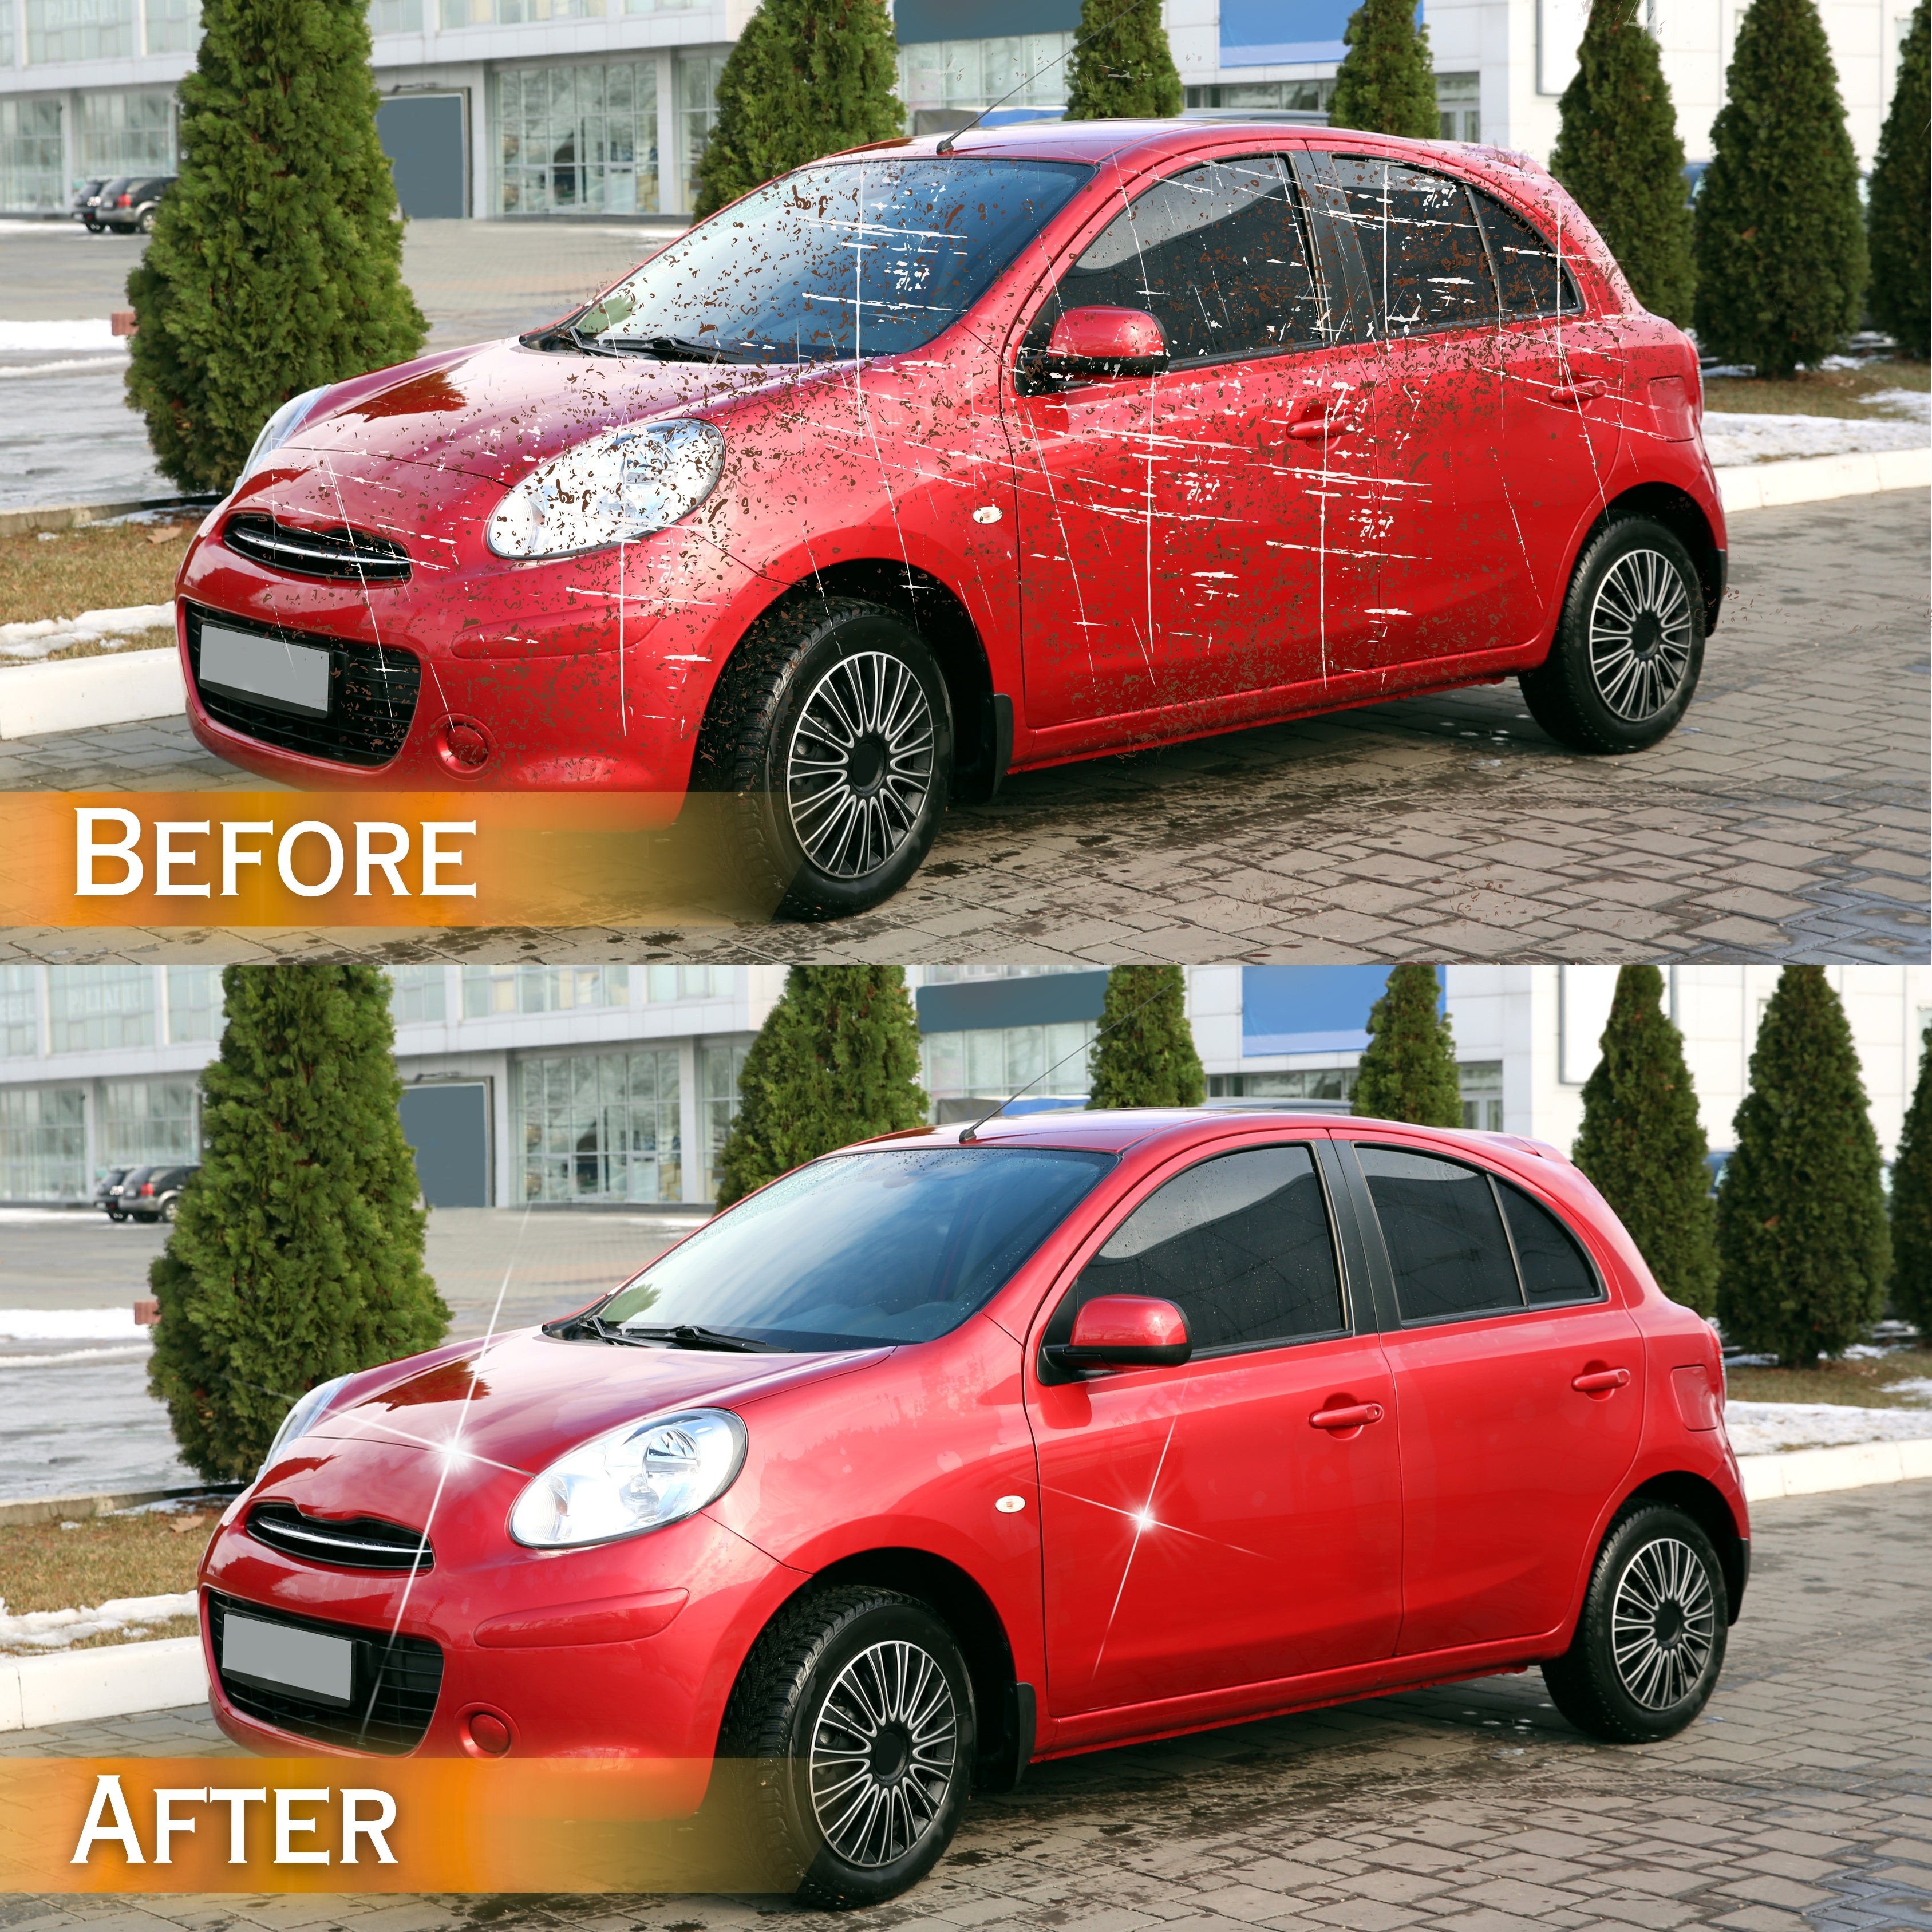 Groommm™ Car Wash Shampoo & Car Exterior Shine Spray Combo - 500 Ml